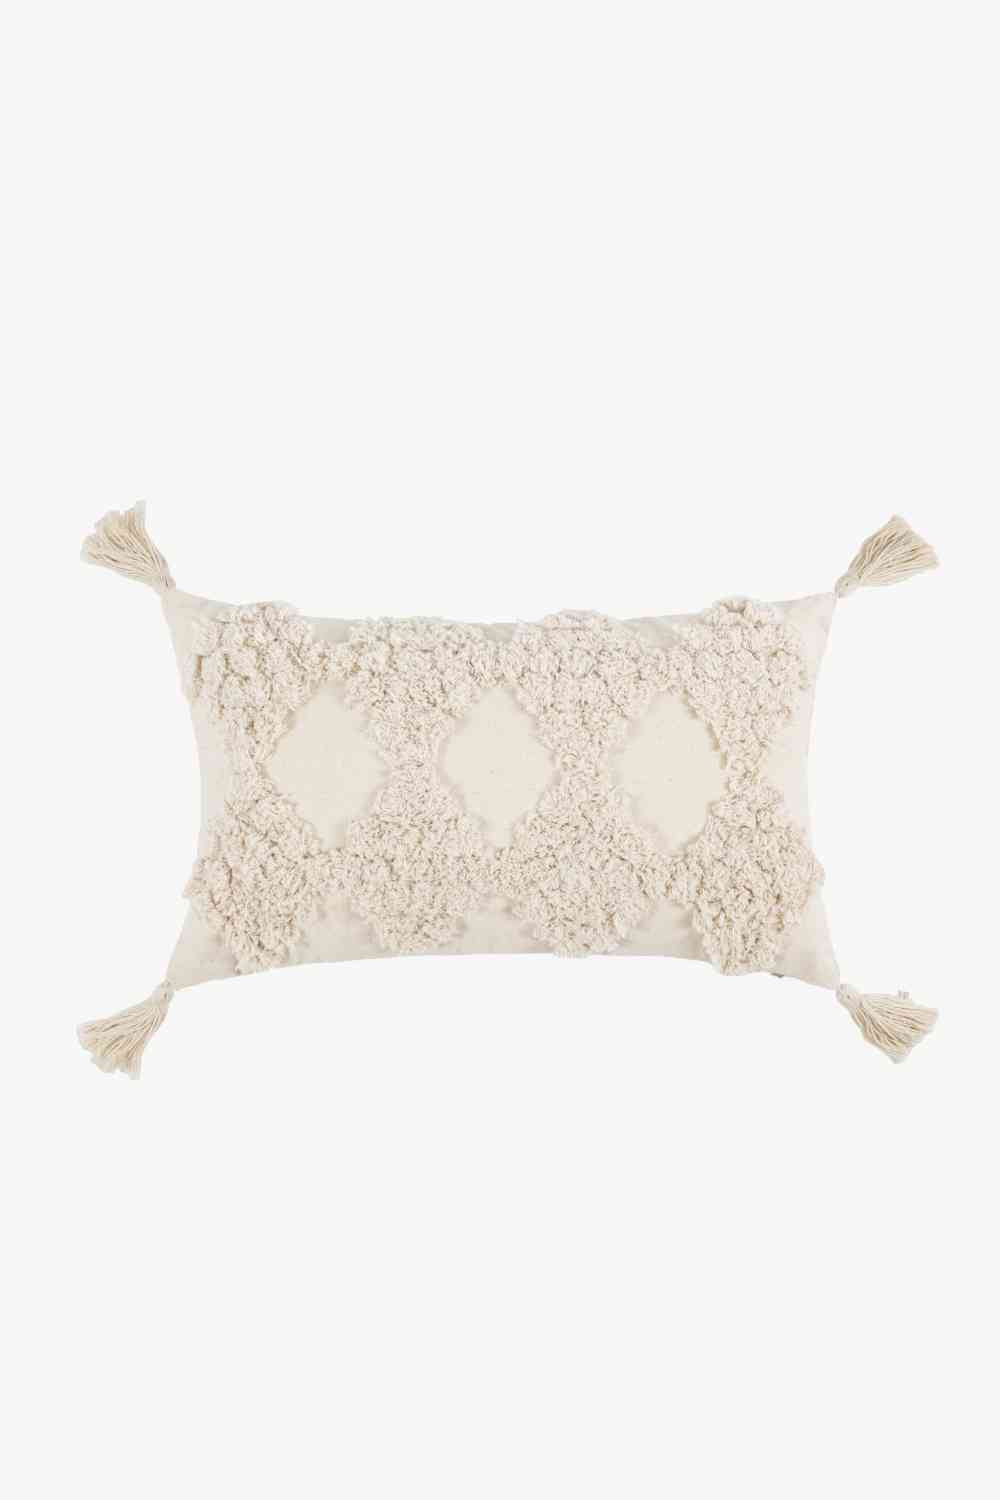 Fringe Decorative Throw Pillow Case